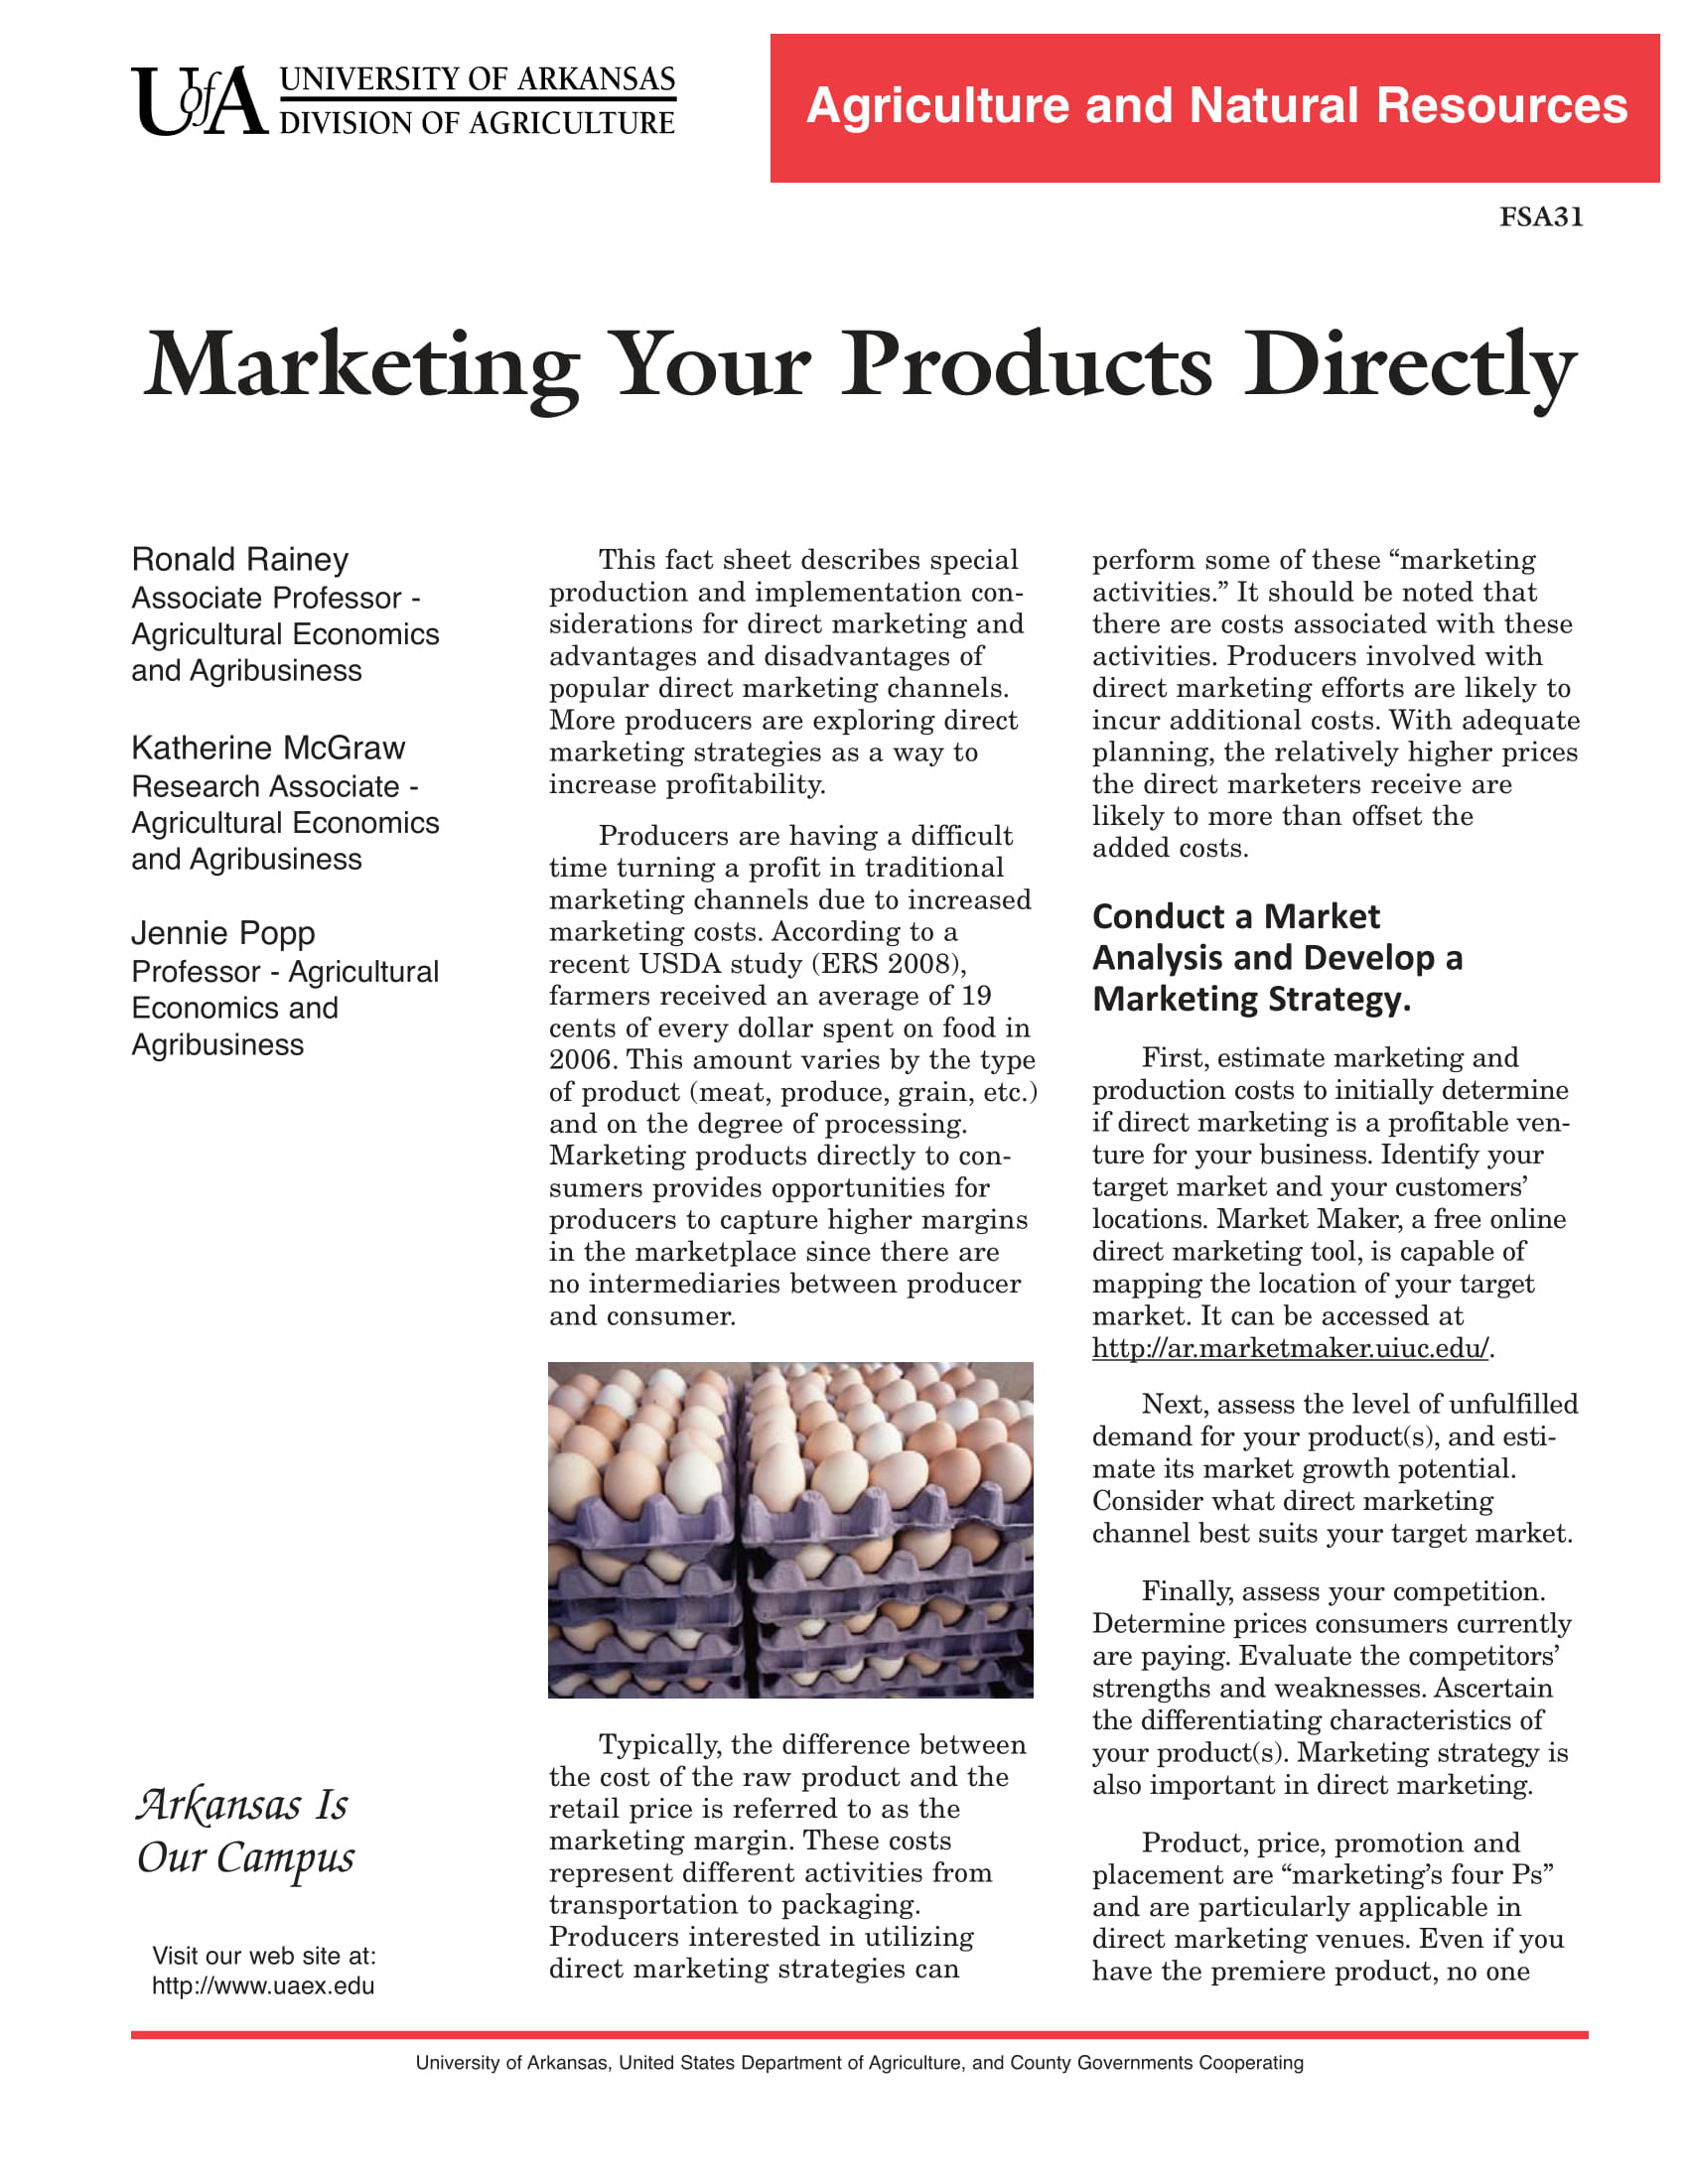 thesis marketing strategy pdf